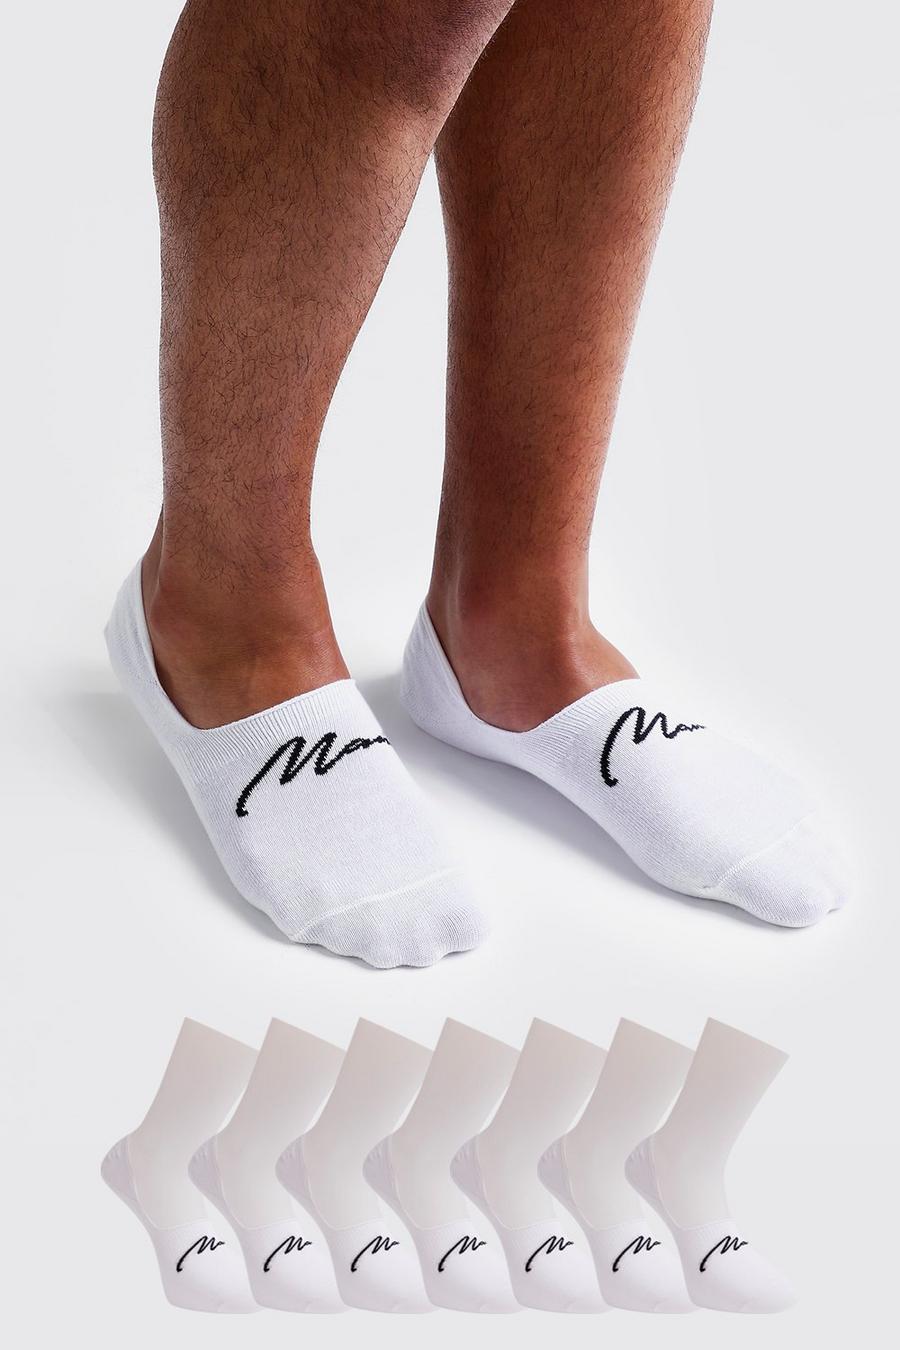 Pack de 7 pares de calcetines invisibles con firma MAN, Blanco white